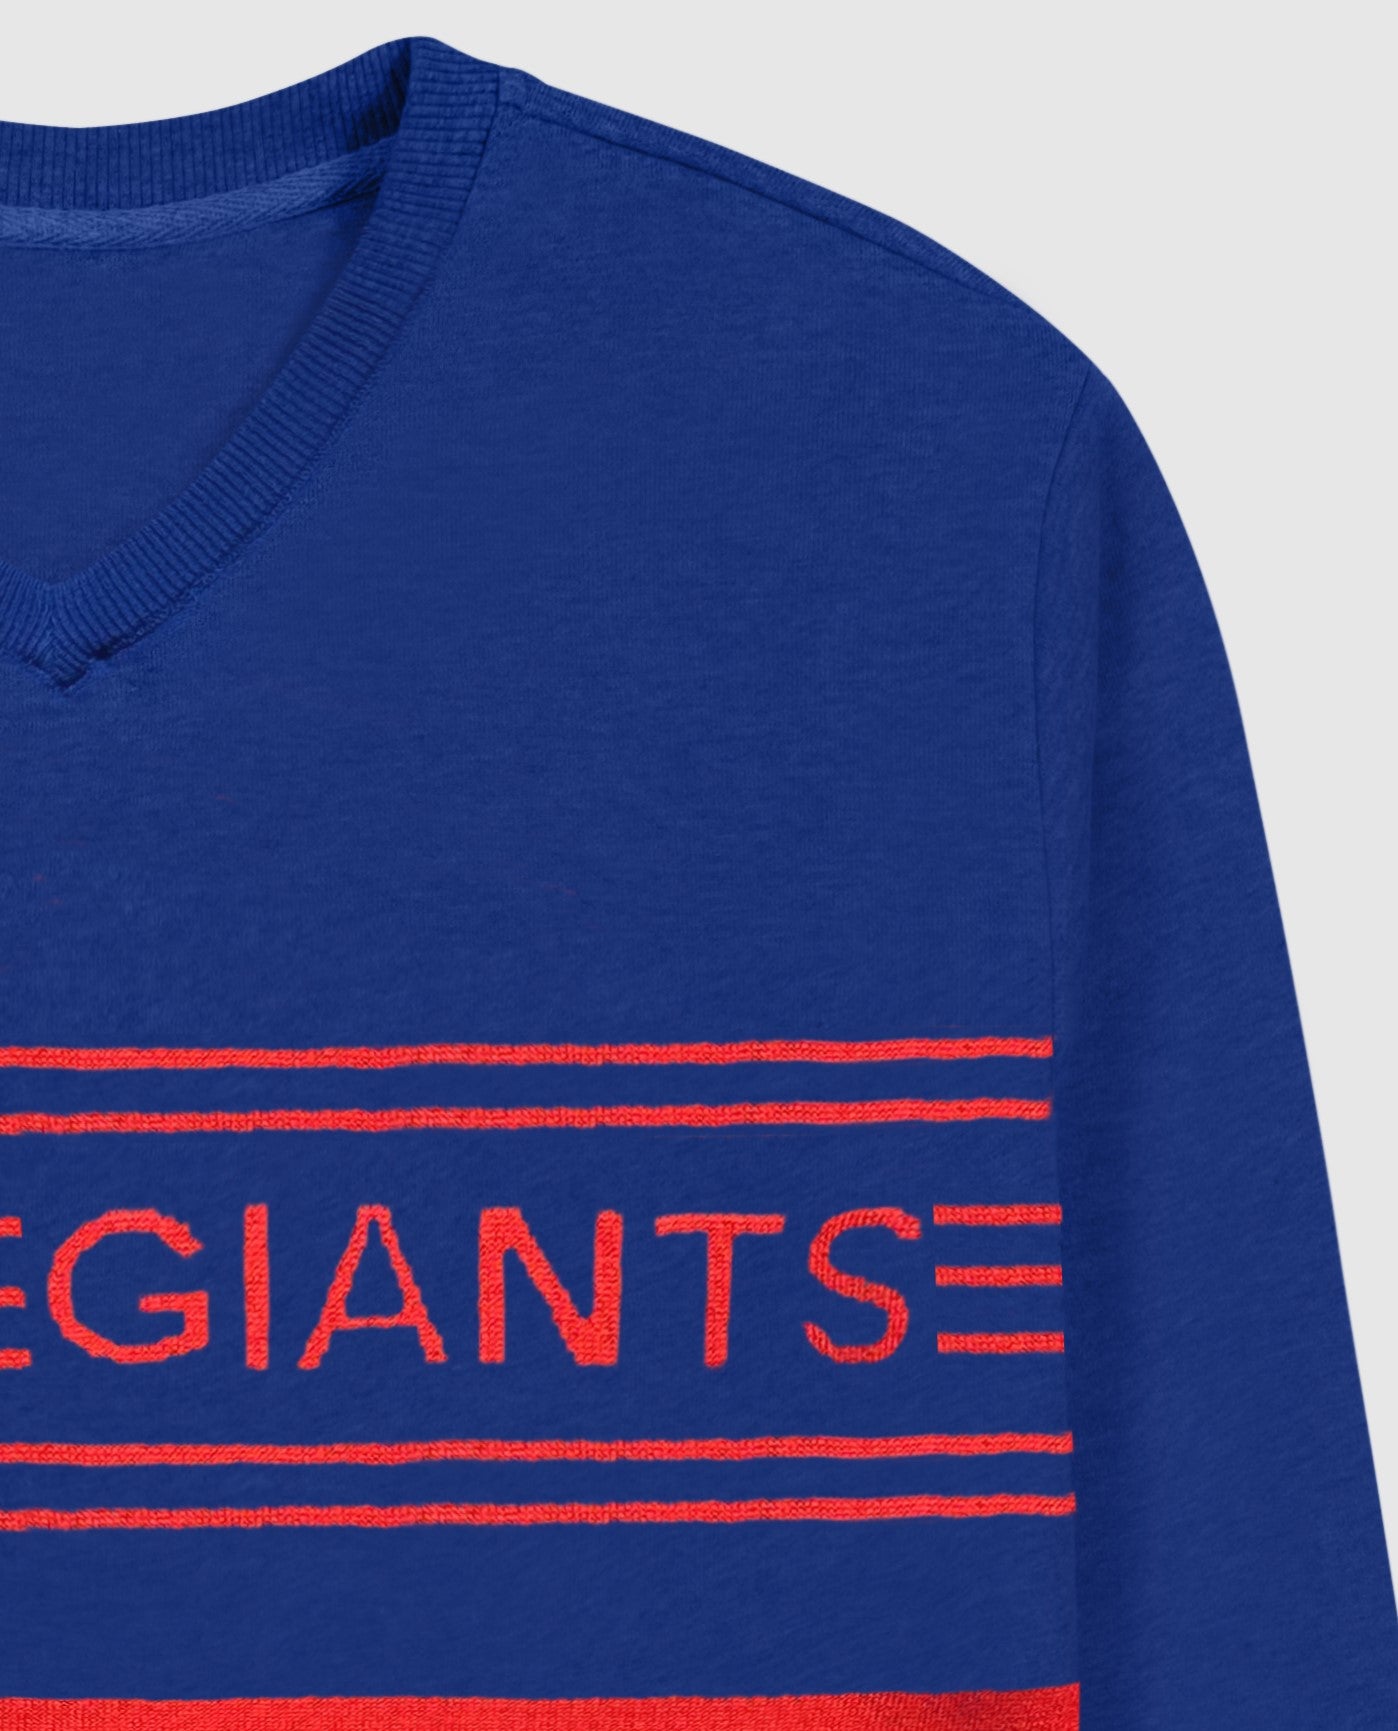 Logo On Left Chest Of New York Giants Jacquard Pullover Sweater | Giants Blue